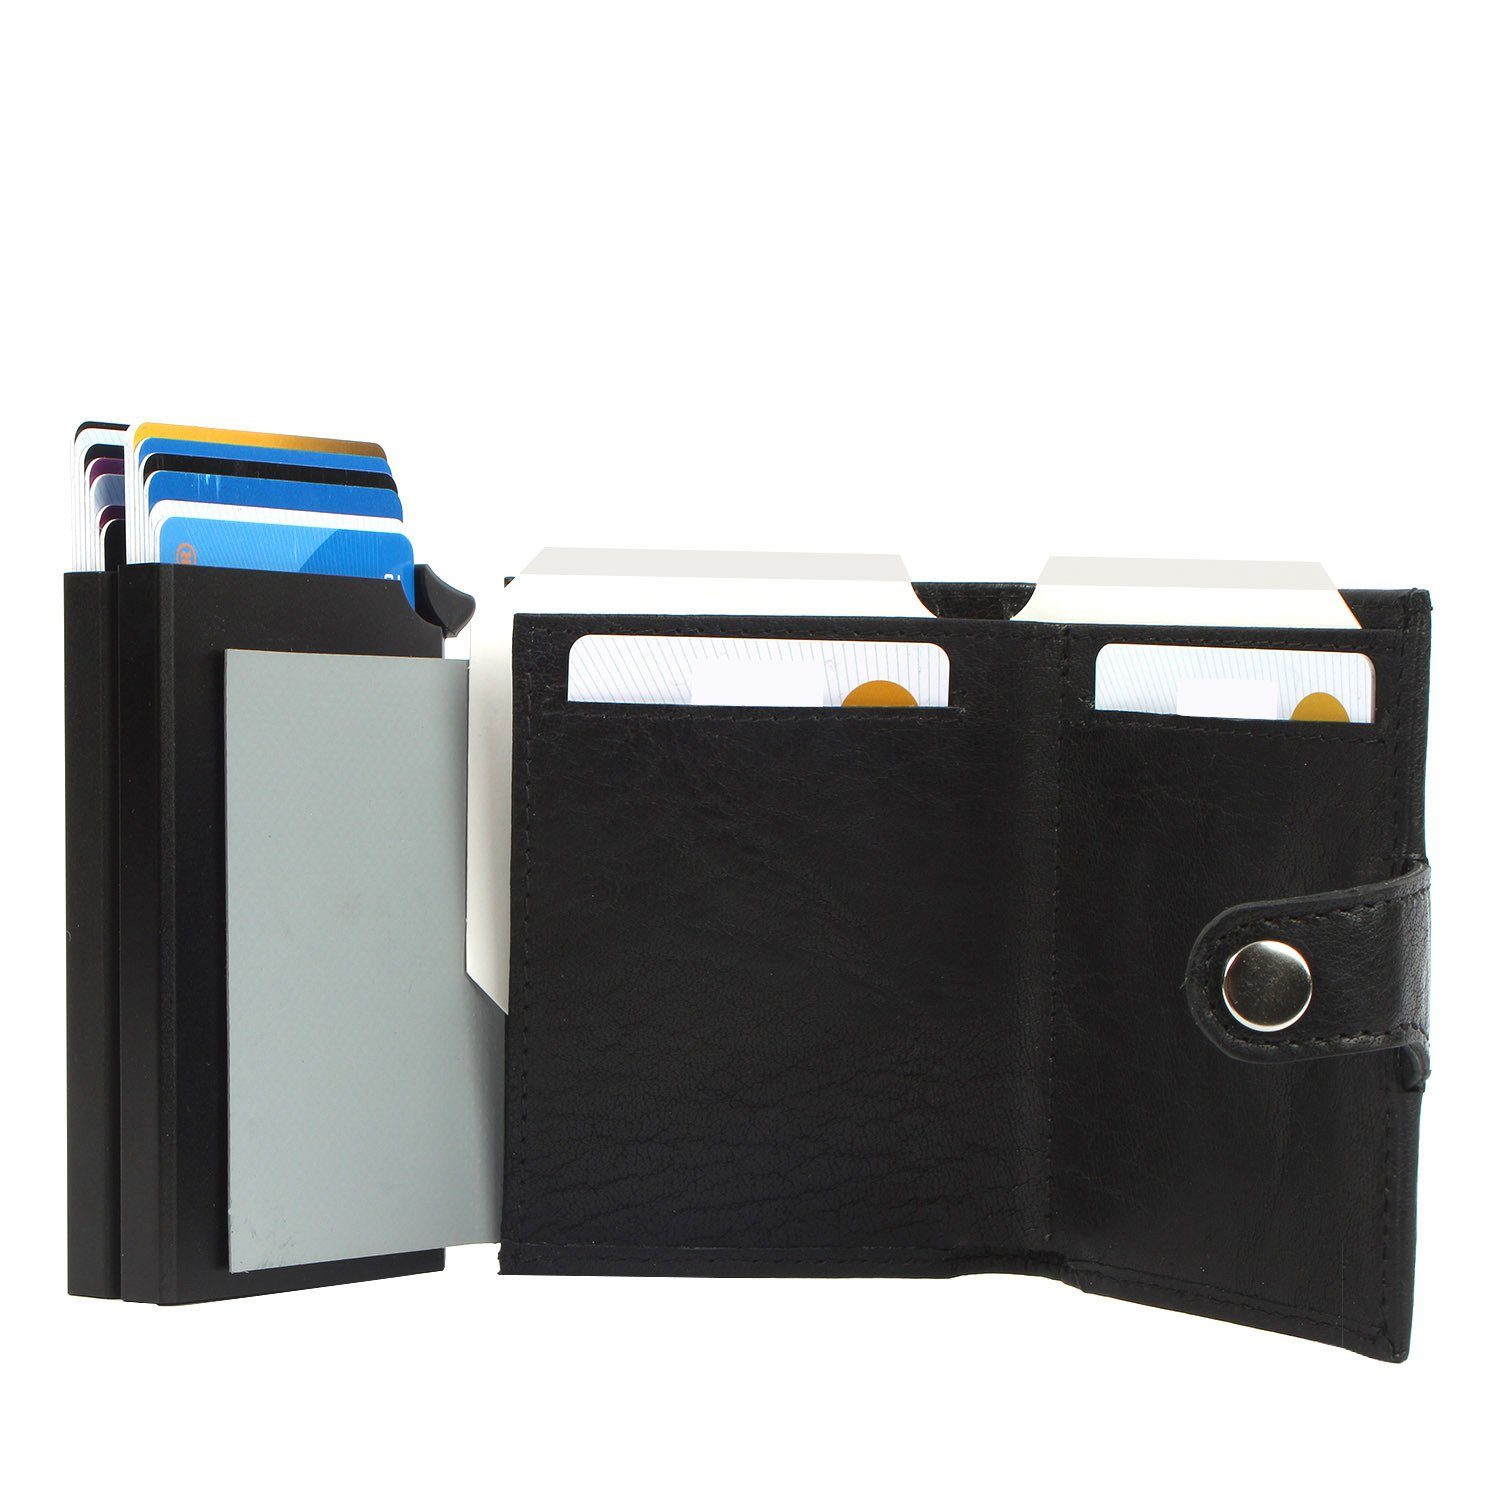 Margelisch Mini Geldbörse noonyu double Kreditkartenbörse leather, deepblack aus RFID Upcycling Leder